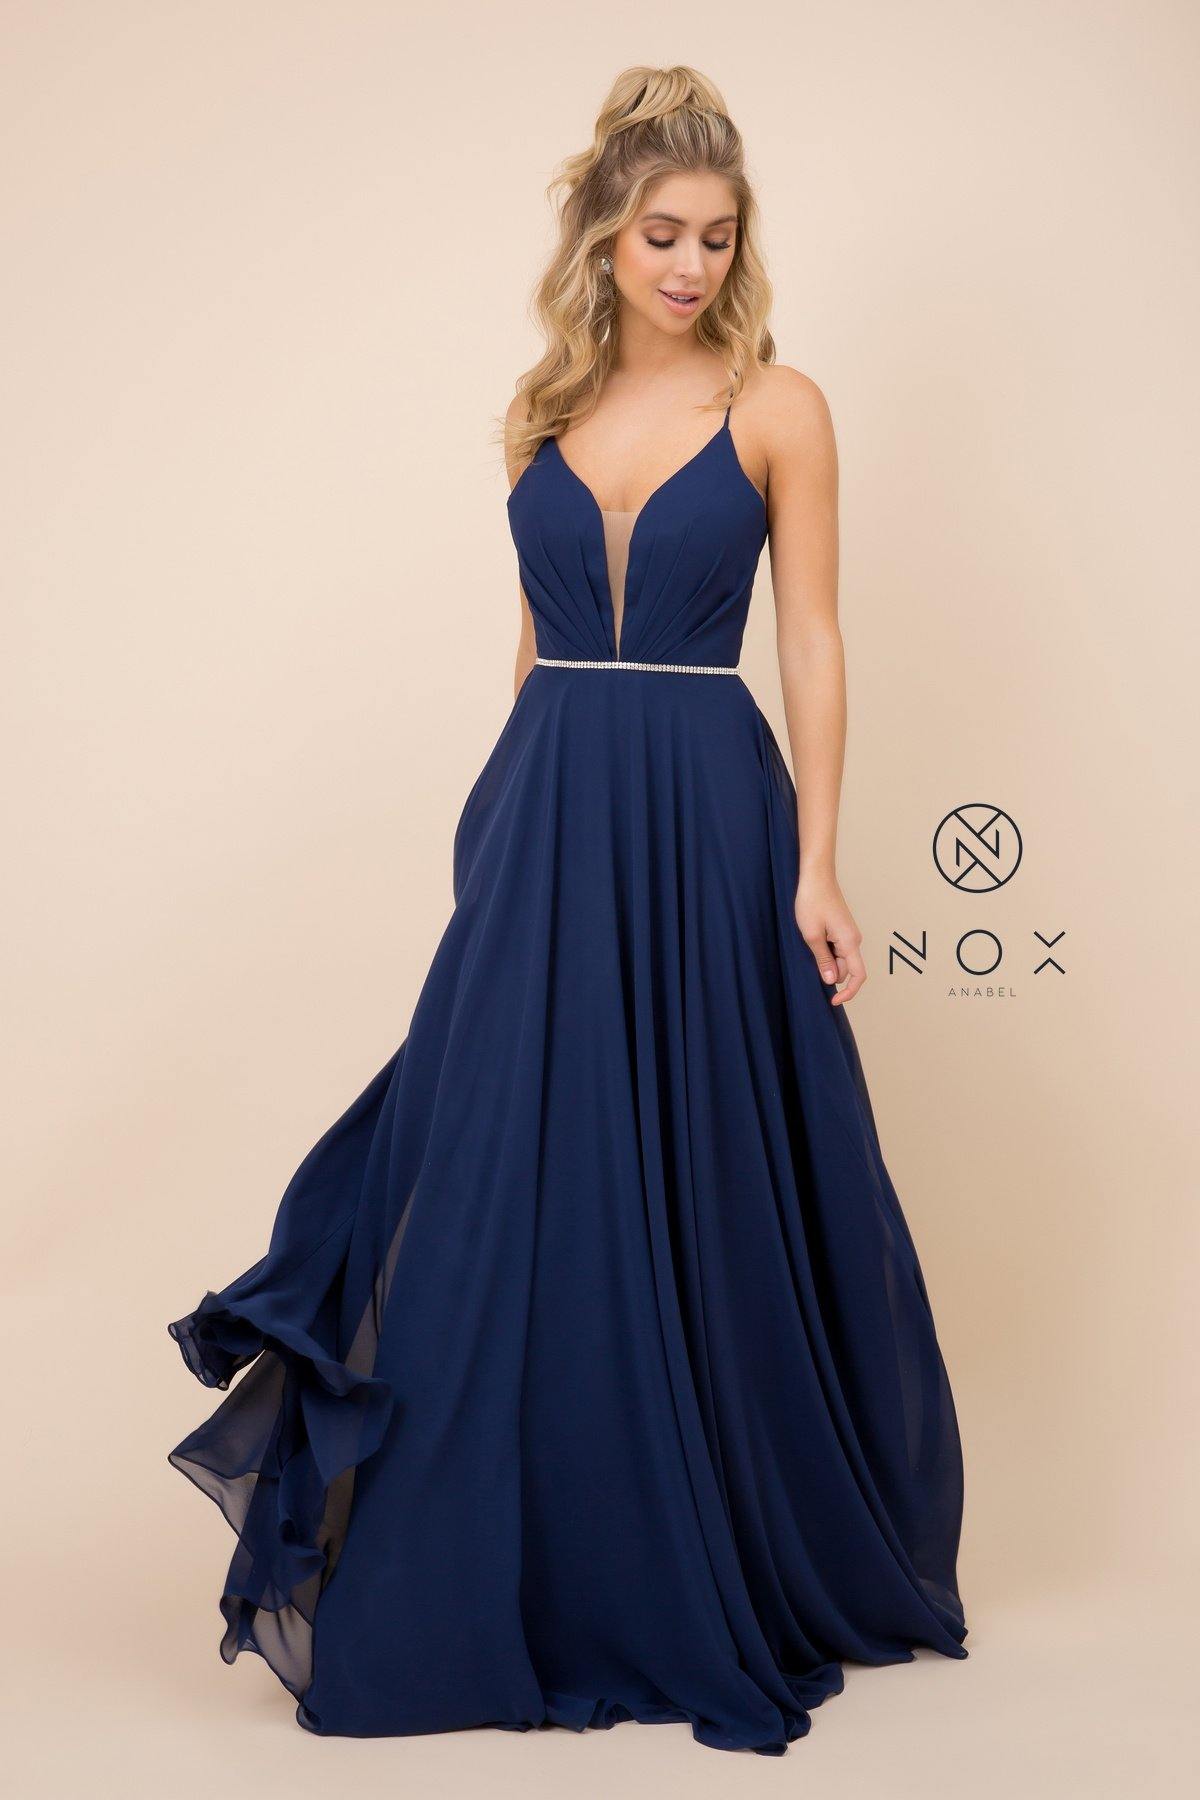 Long Deep V-Neck Dress Prom Dress - The Dress Outlet Nox Anabel